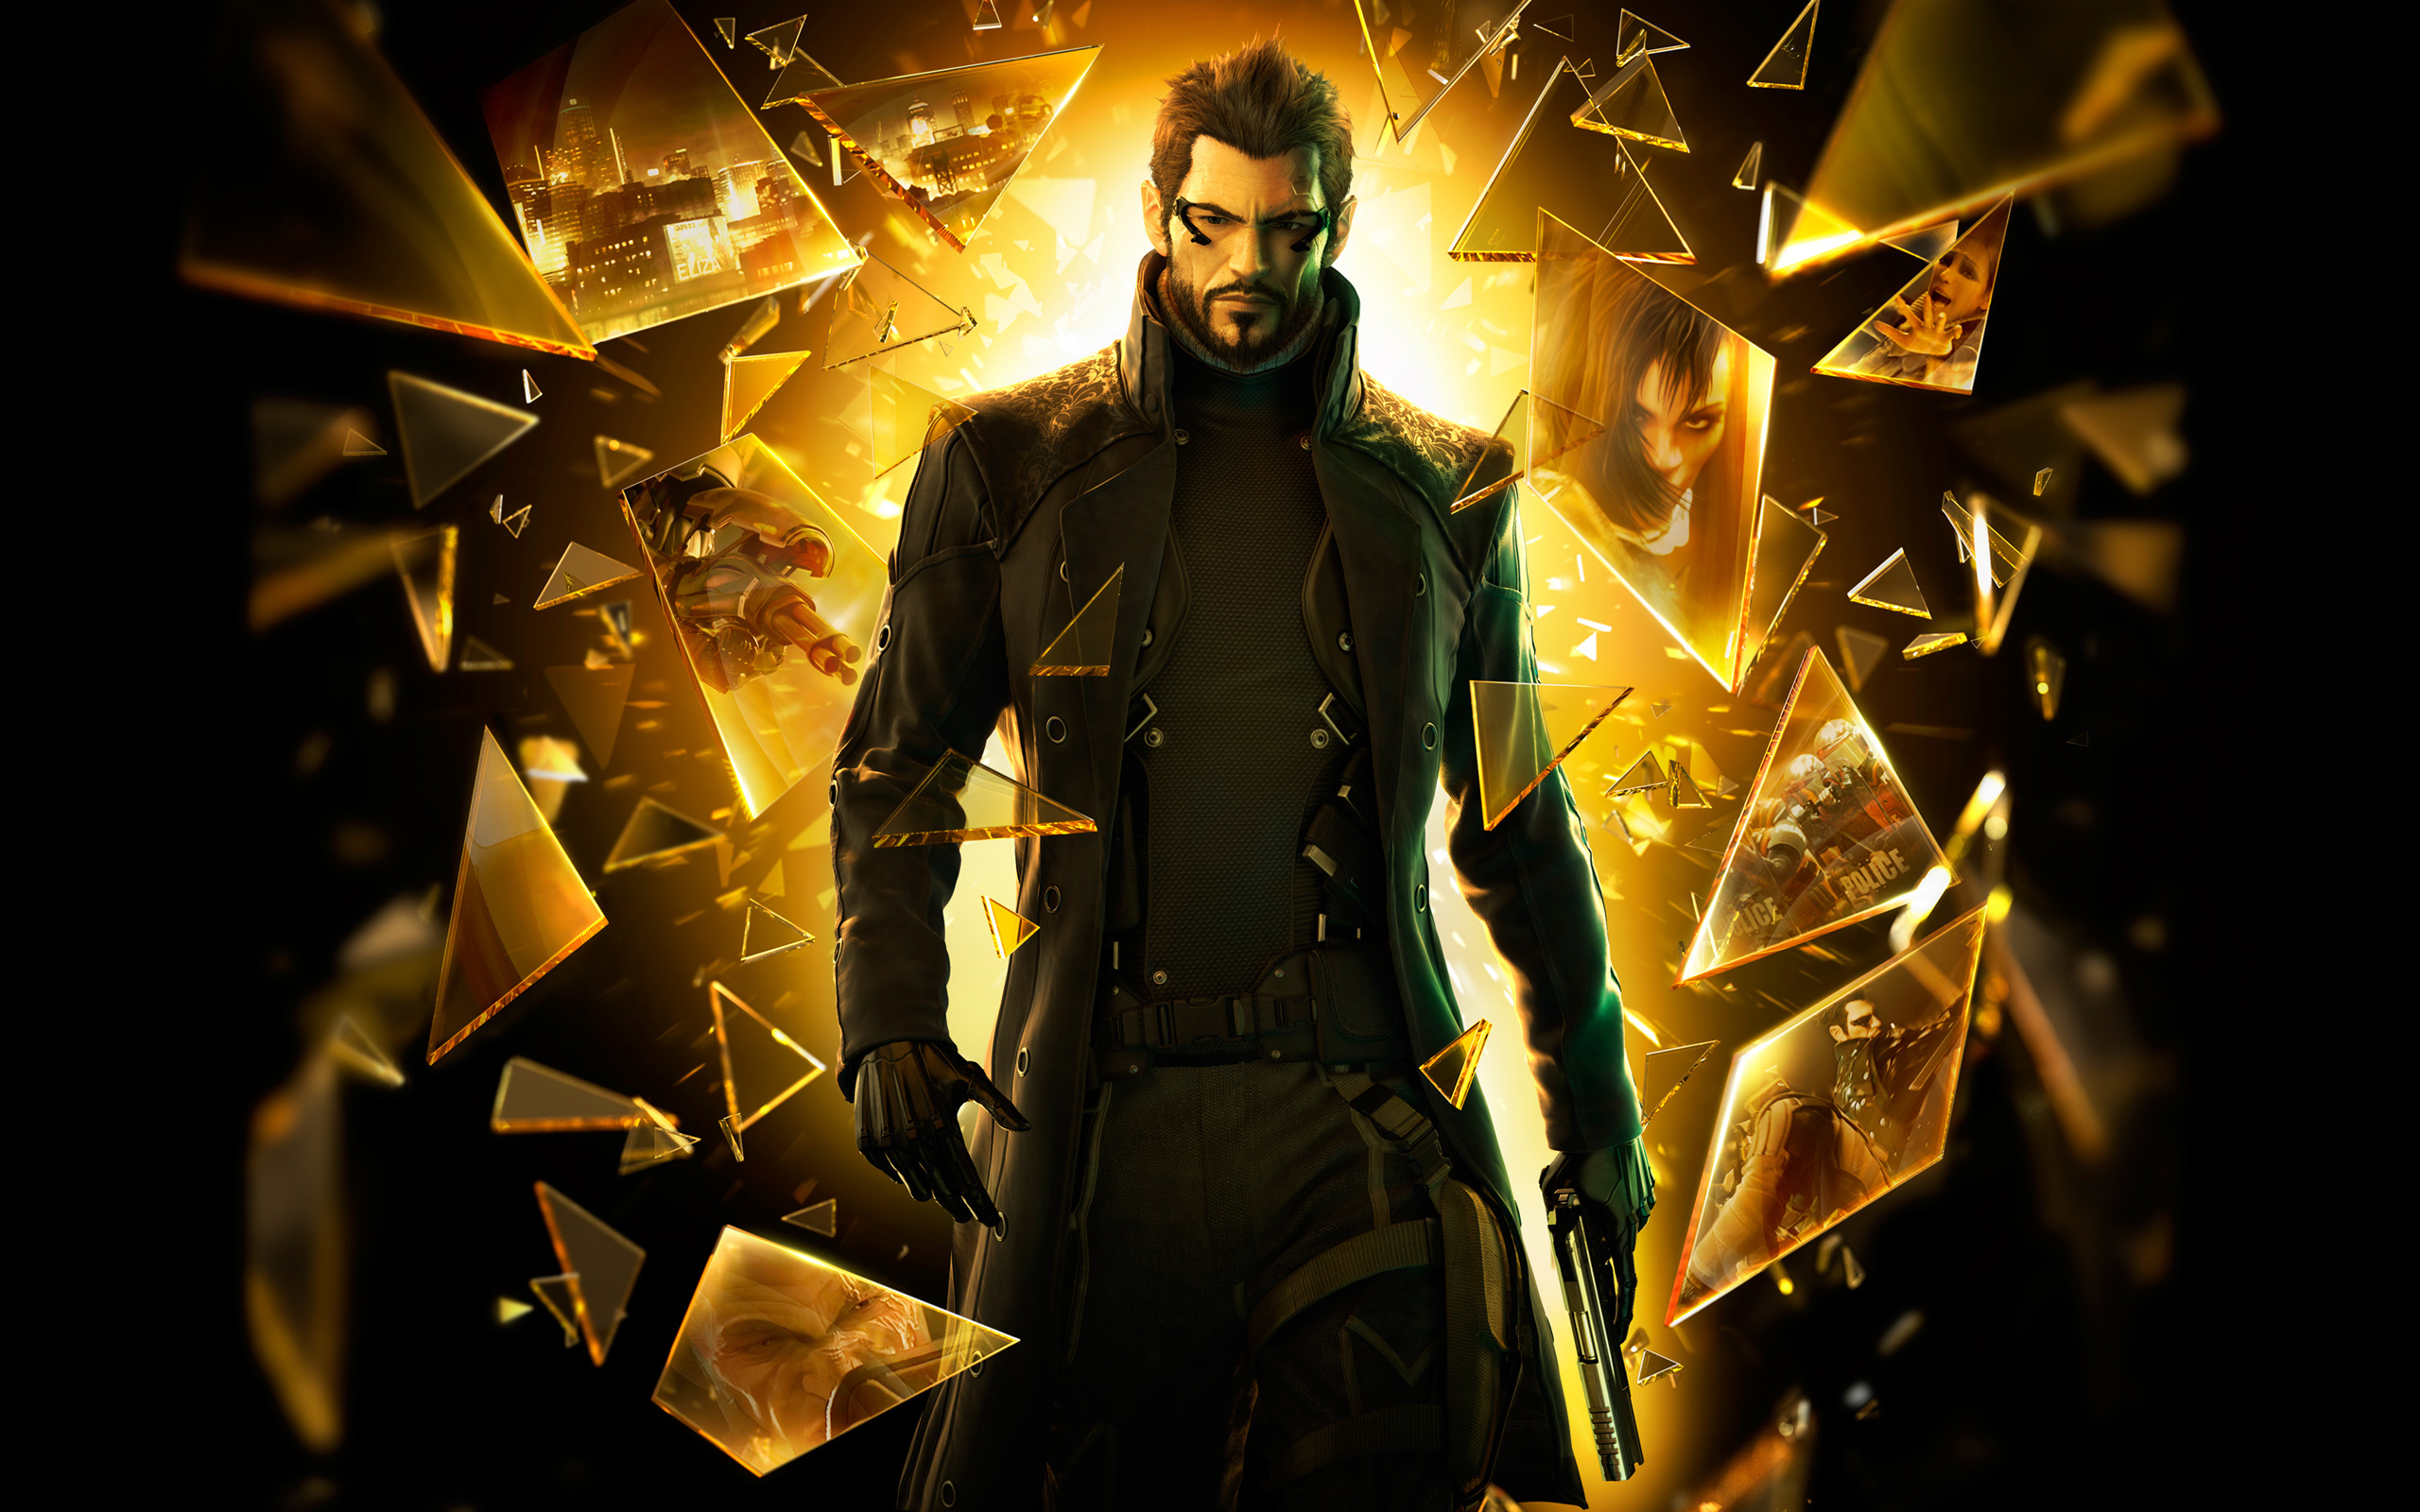 General 2560x1600 Adam Jensen Deus Ex Deus Ex: Human Revolution video game characters video games video game men gun shattered glass